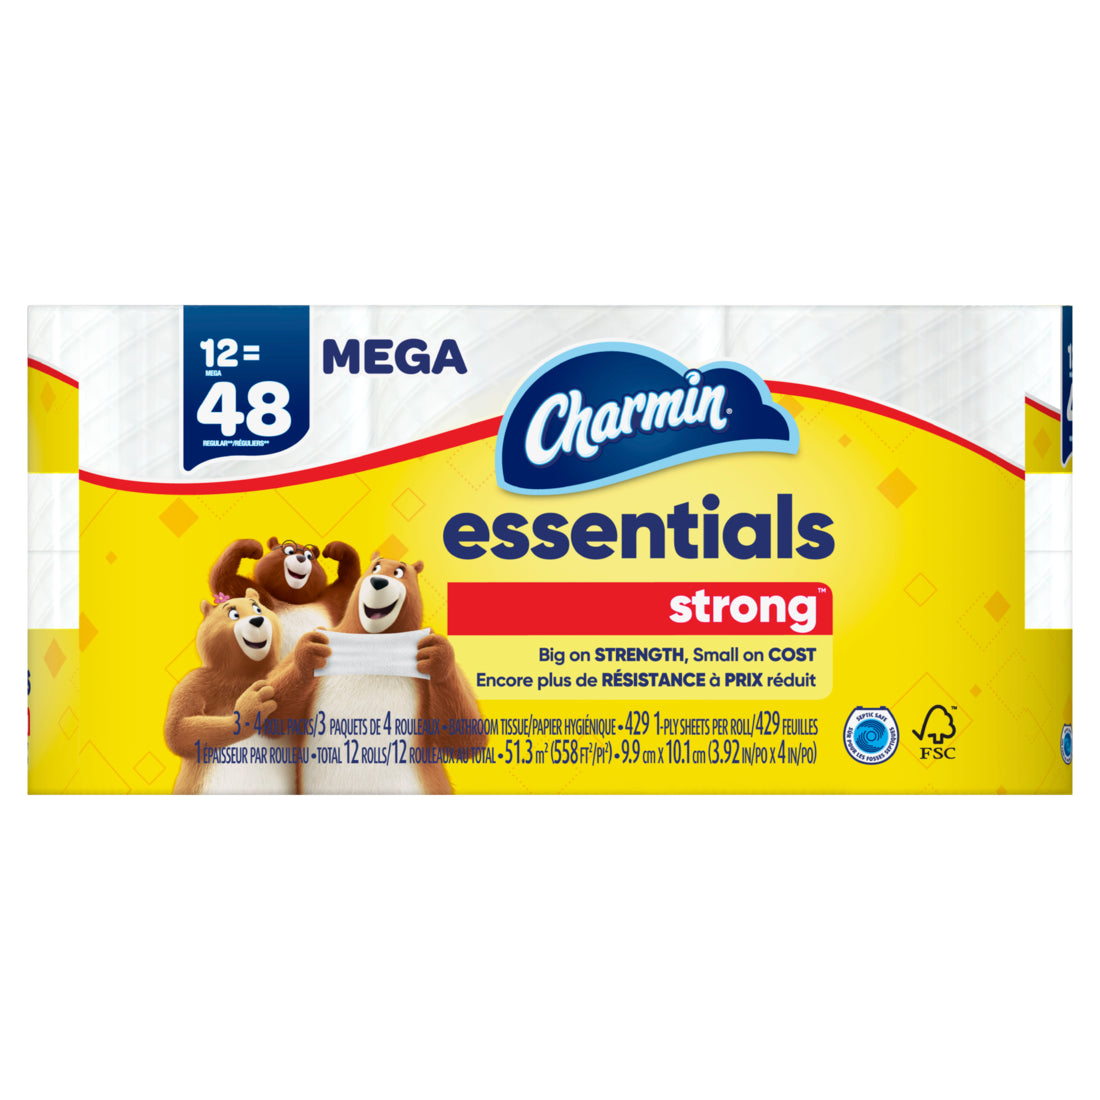 Charmin Essentials Strong Toilet Paper 429 sheets per roll - 12ct/1pk